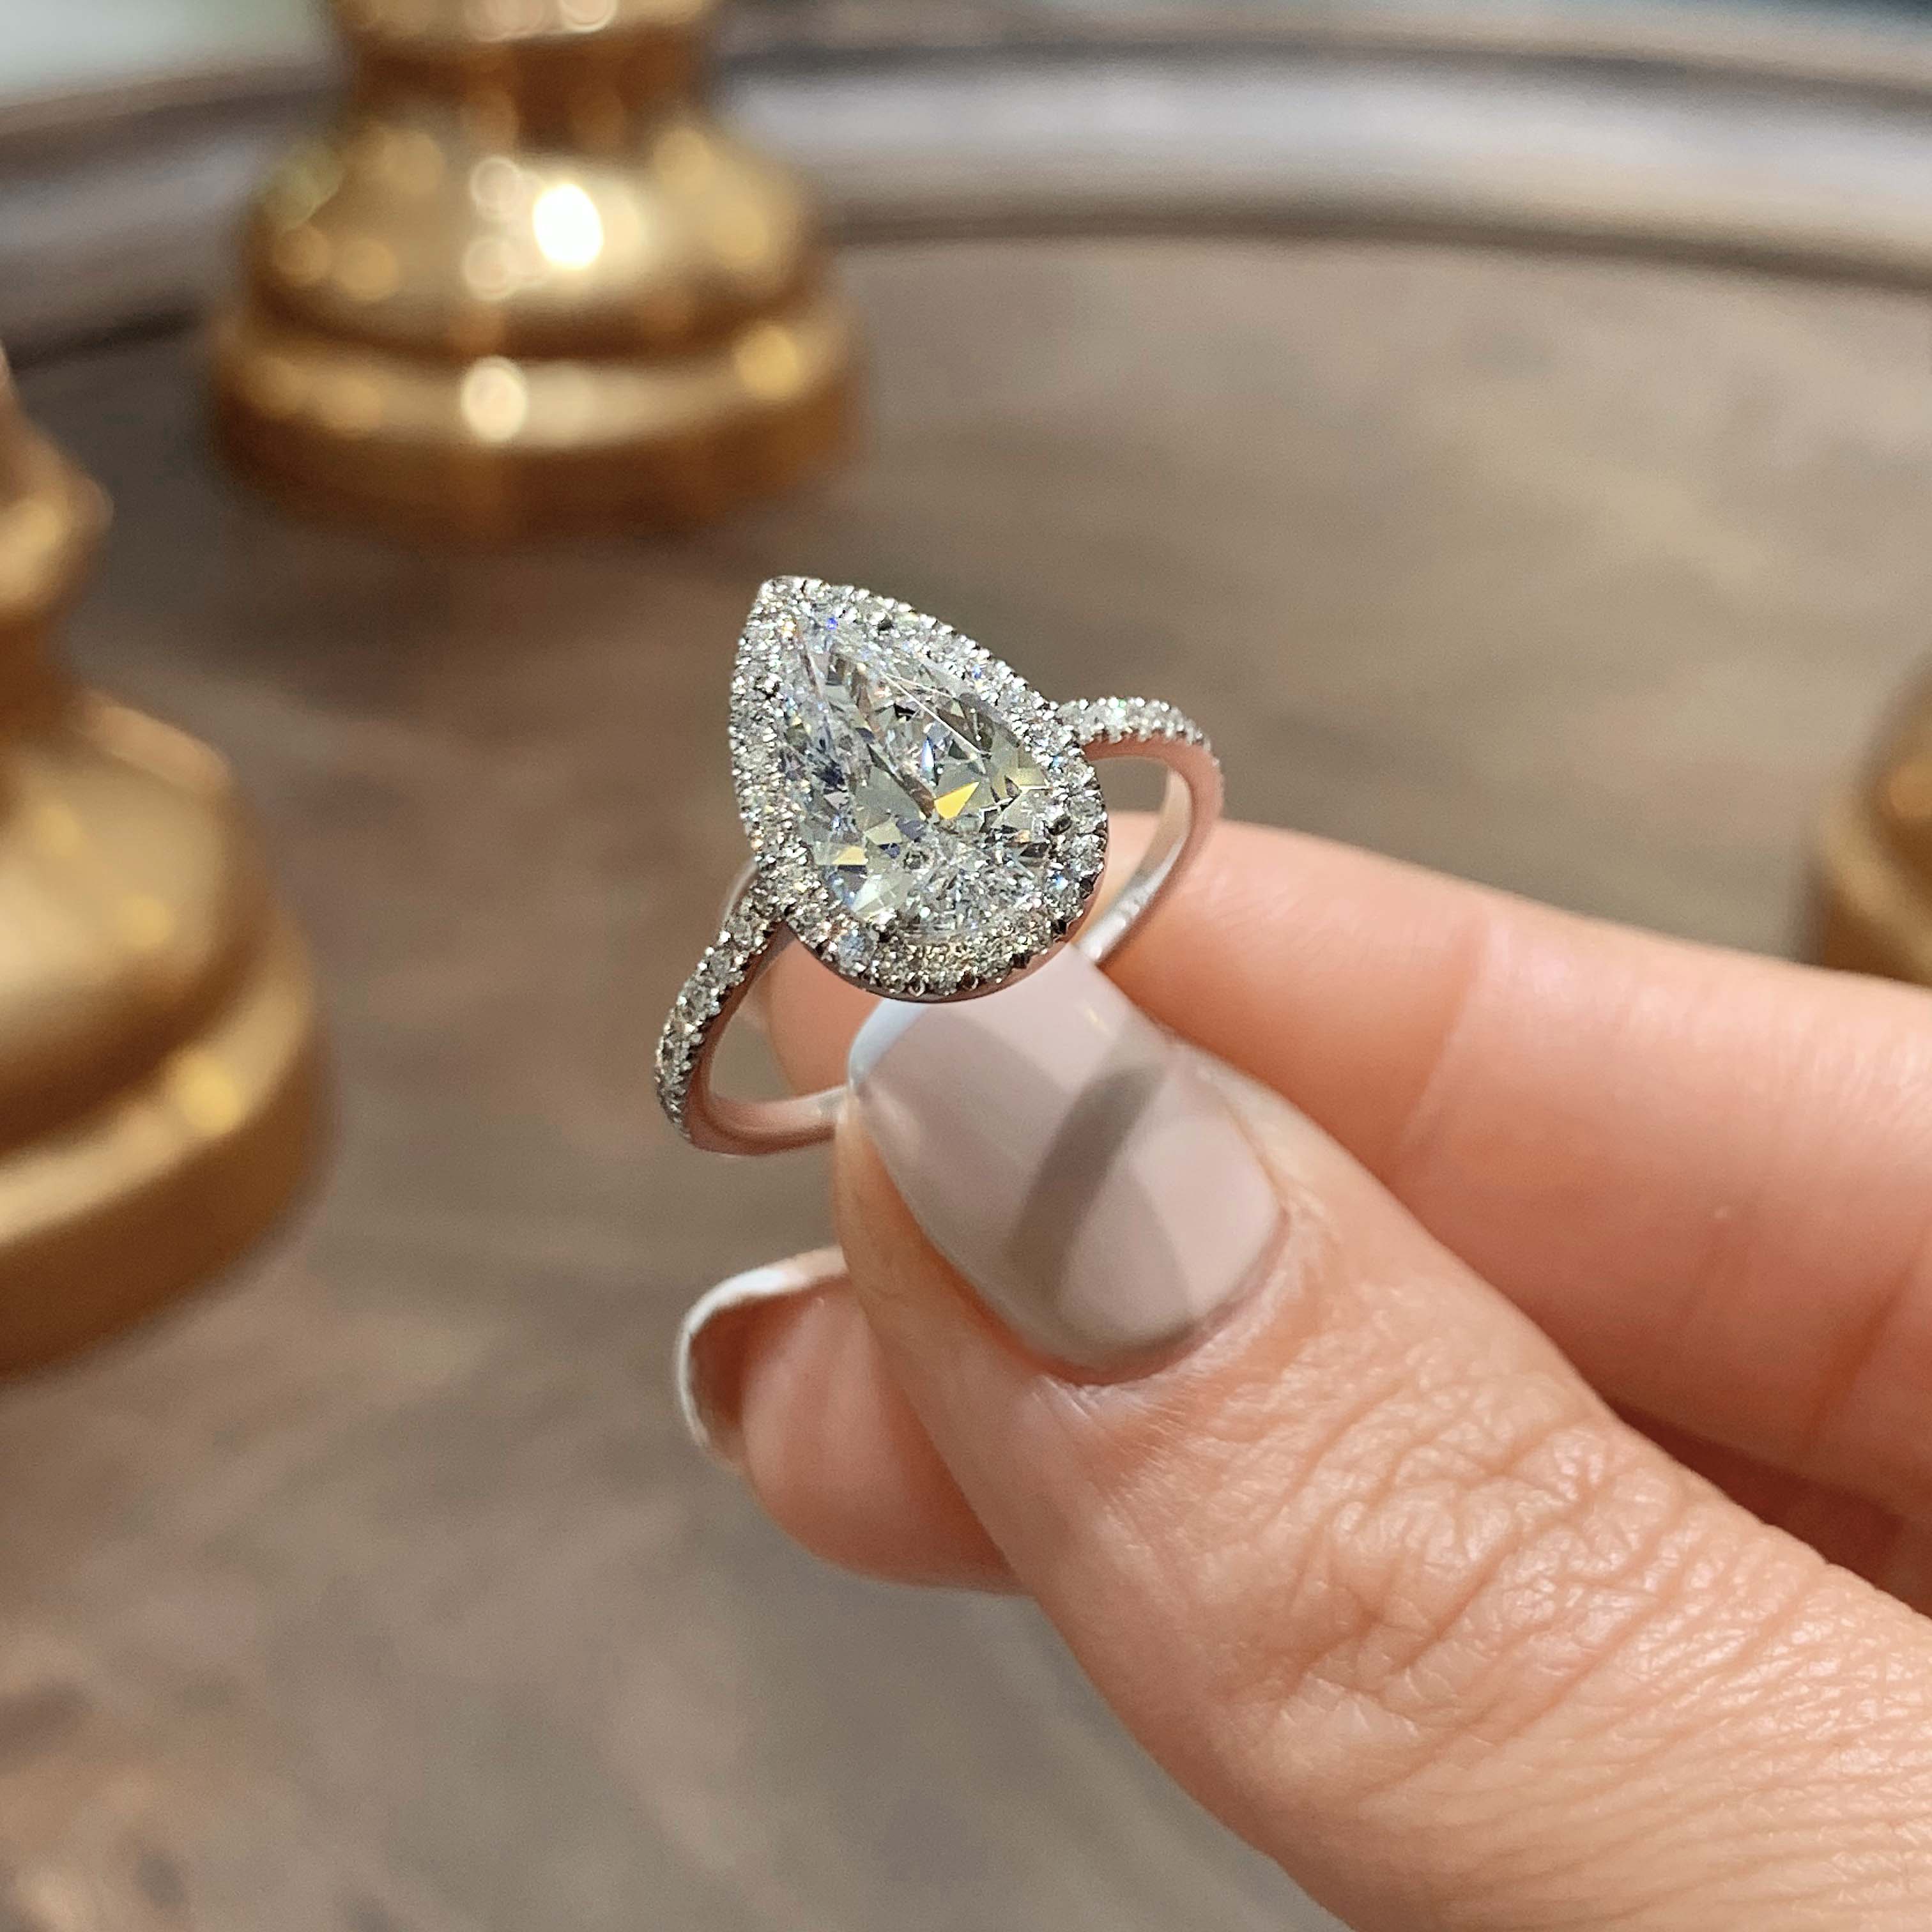 Sophia Diamond Engagement Ring   (2.5 Carat) -14K White Gold